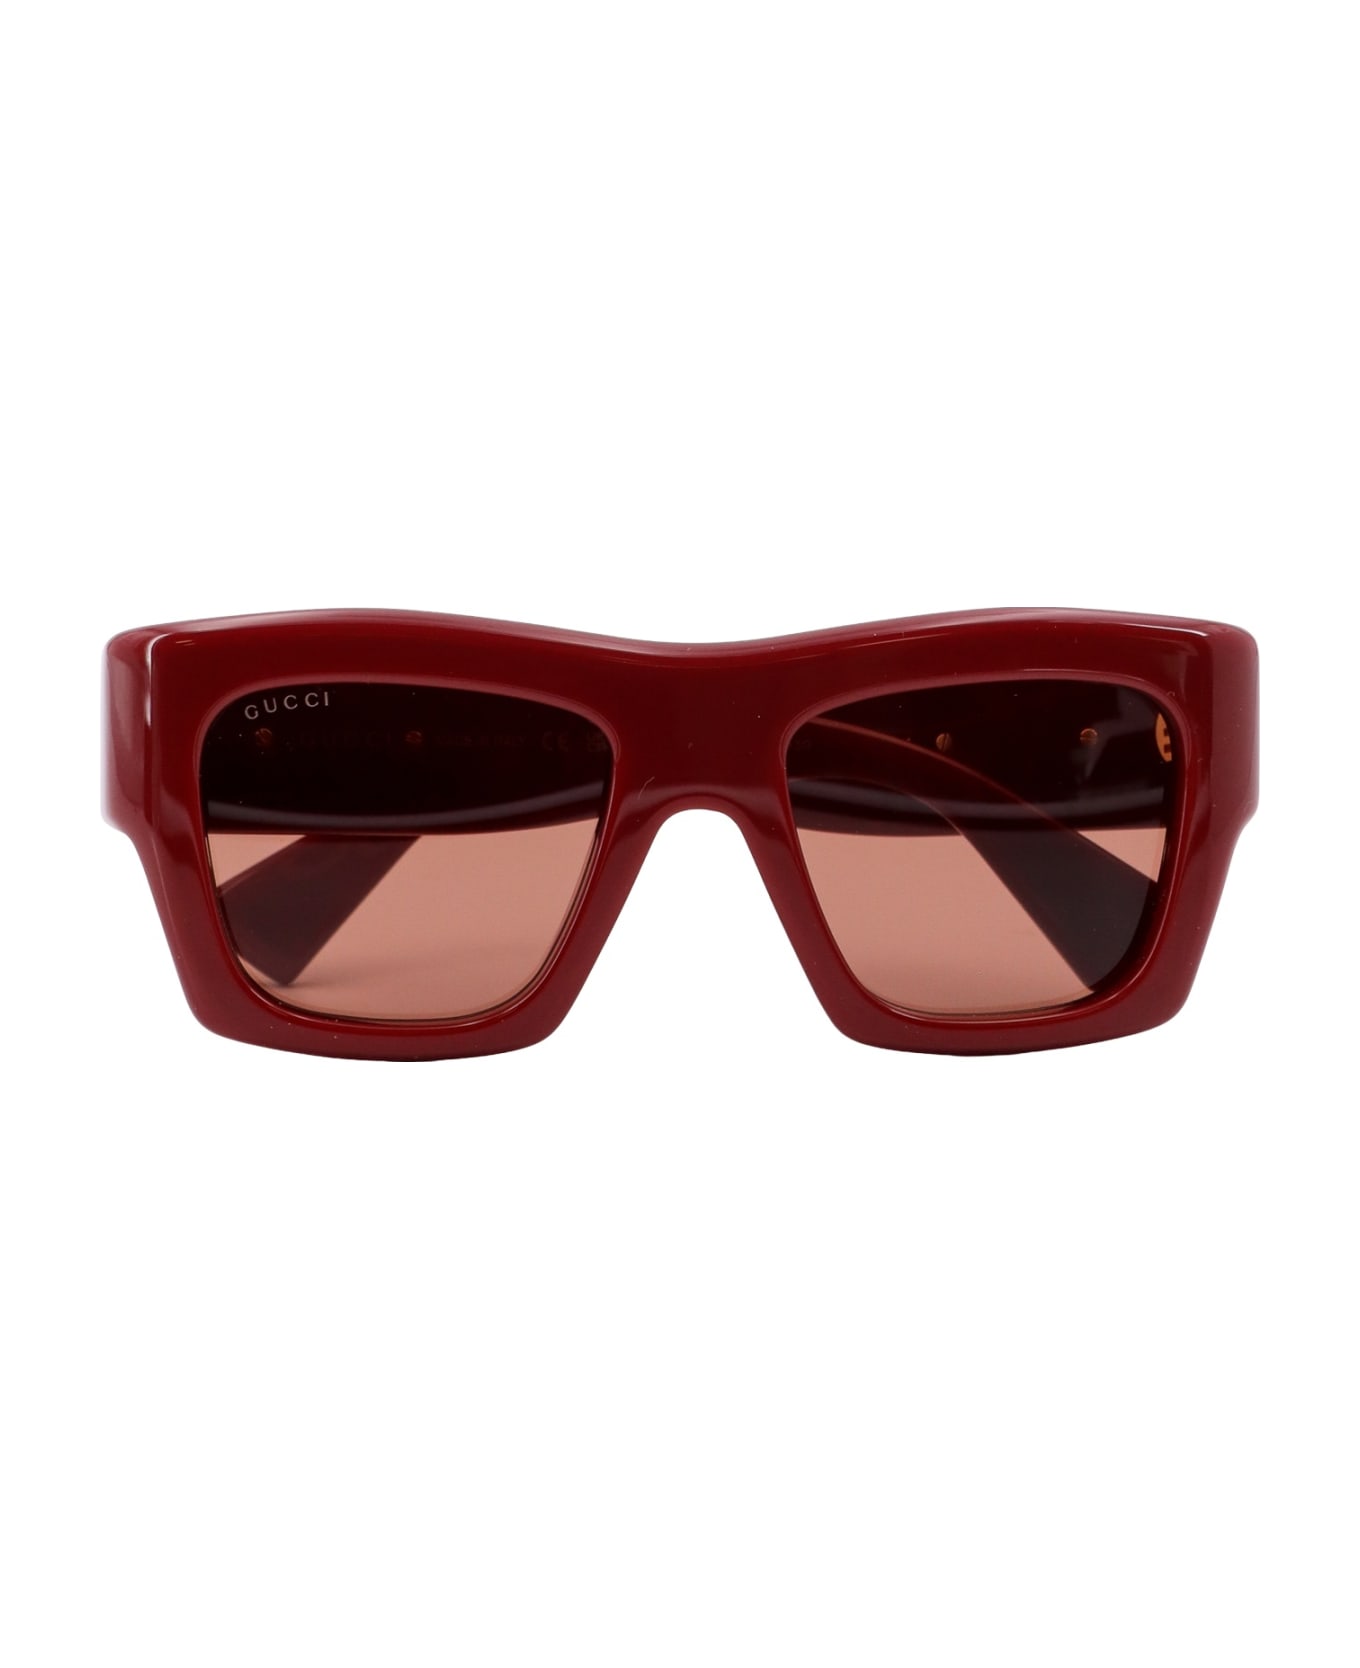 Gucci Sunglasses - Red サングラス